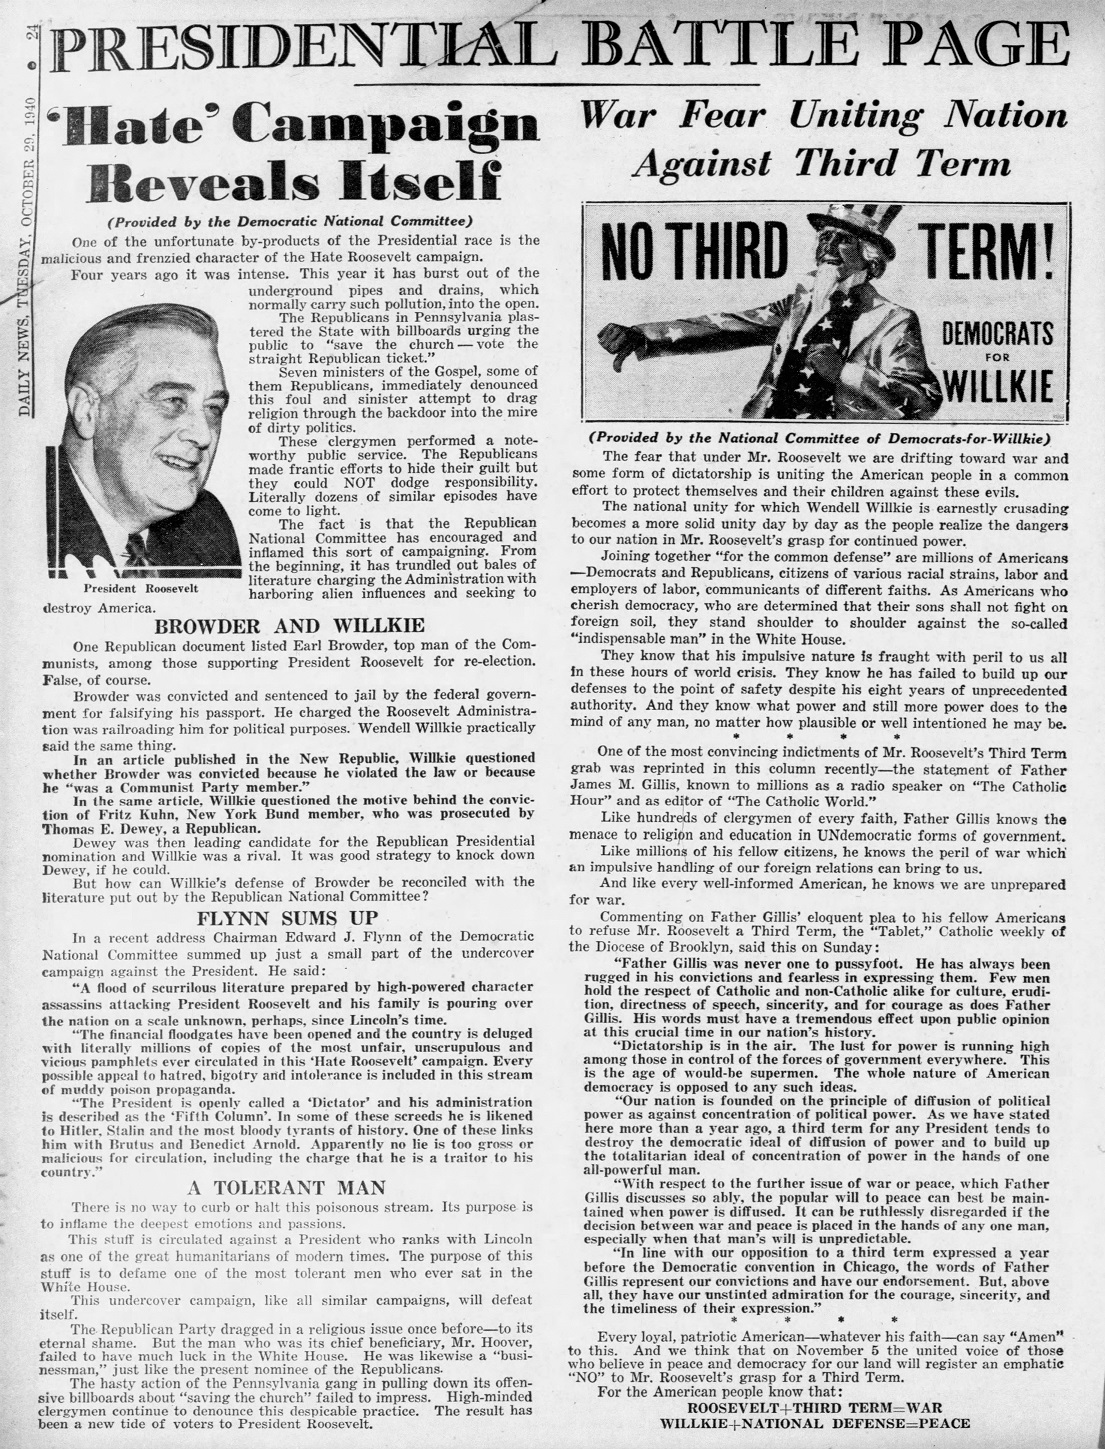 Daily_News_Tue__Oct_29__1940_(1).jpg